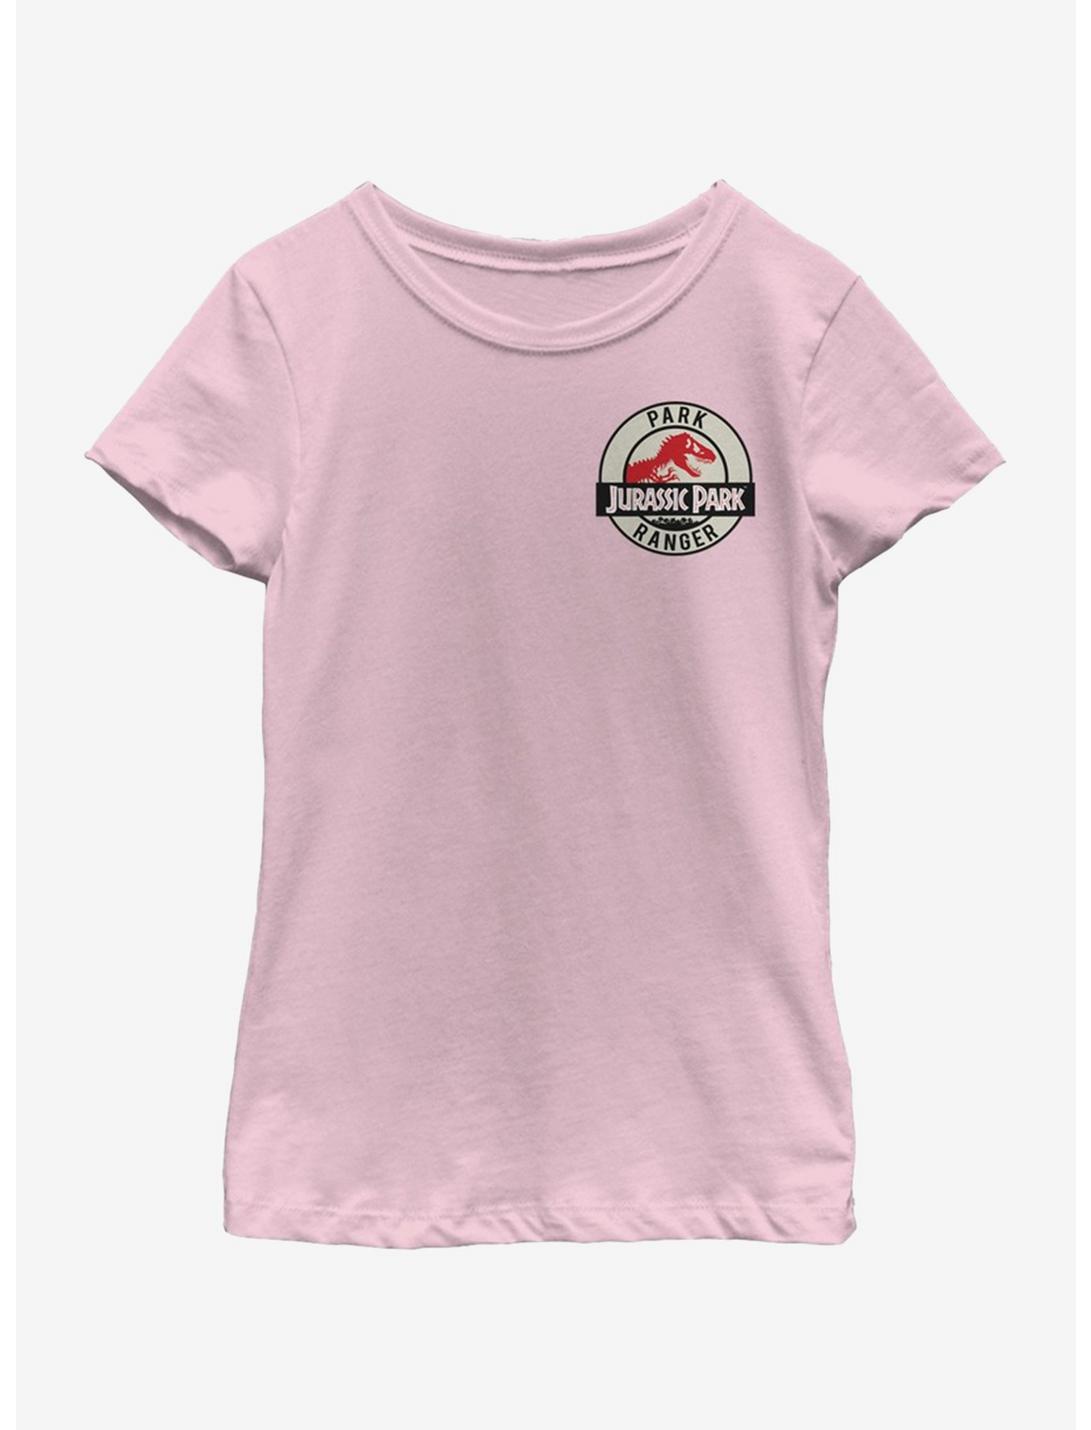 Jurassic Park Park Ranger Tan Badge Youth Girls T-Shirt, PINK, hi-res